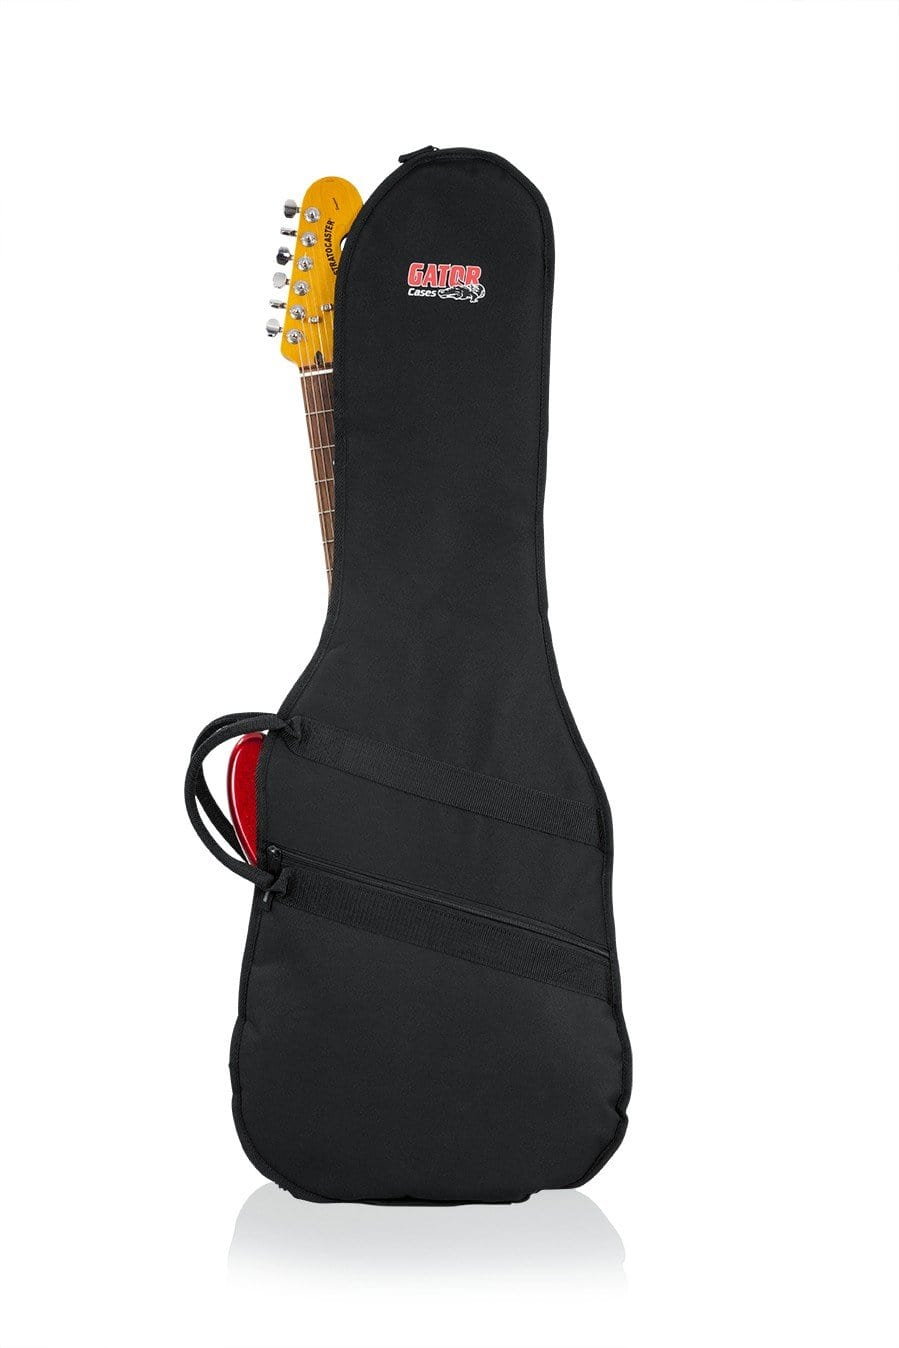 Gator Economy Gig Bag for Electric Guitars Guitars on Main